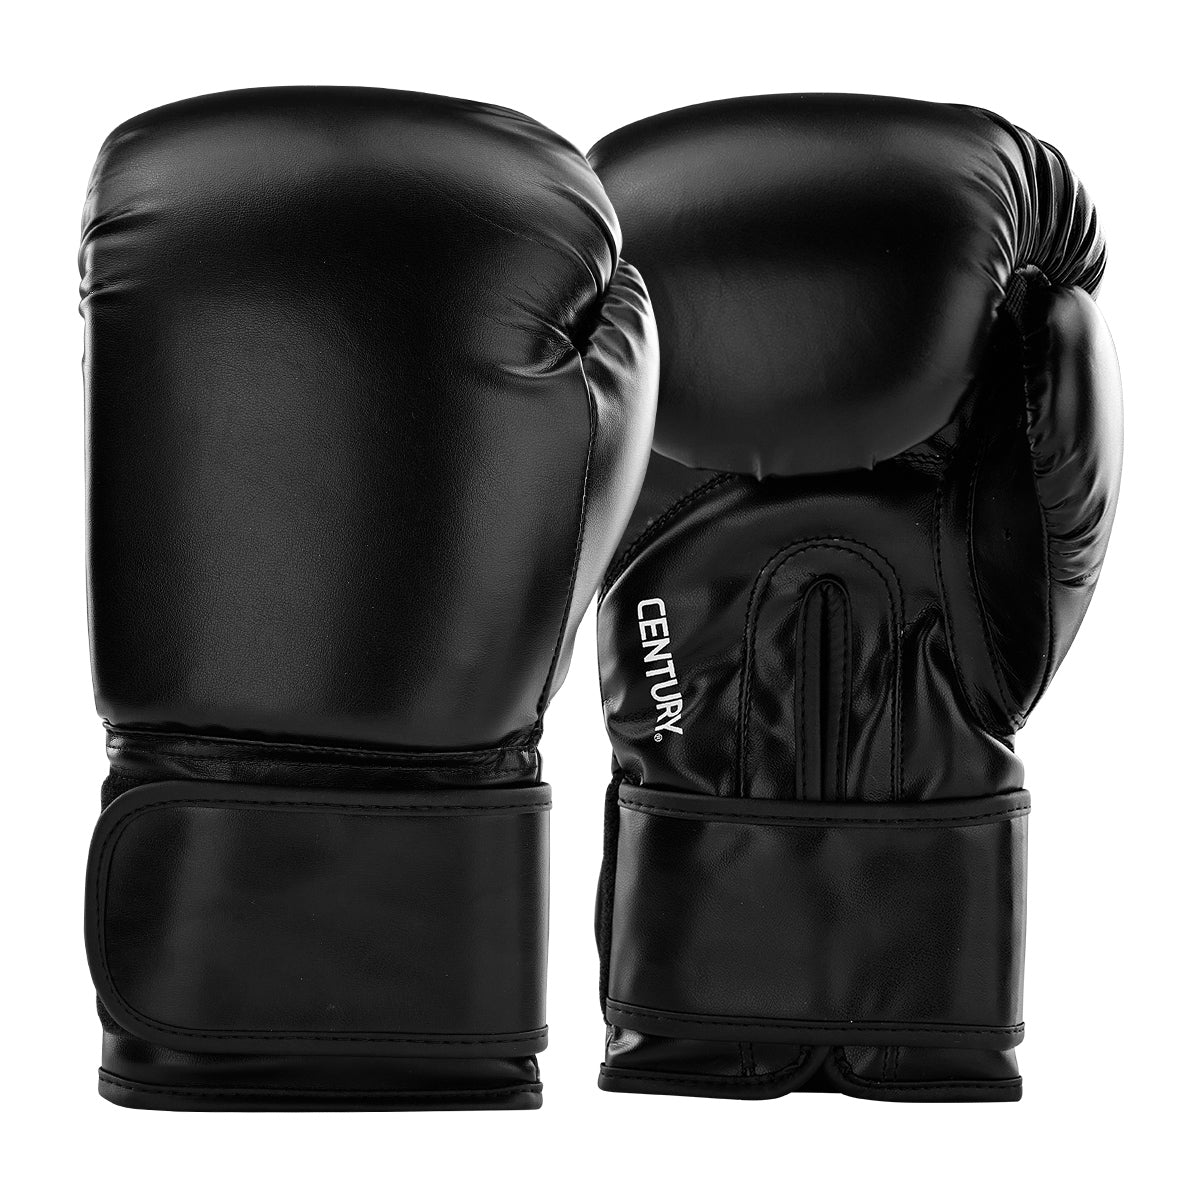 Century Custom Heavy Bag Glove 12 Oz. Black